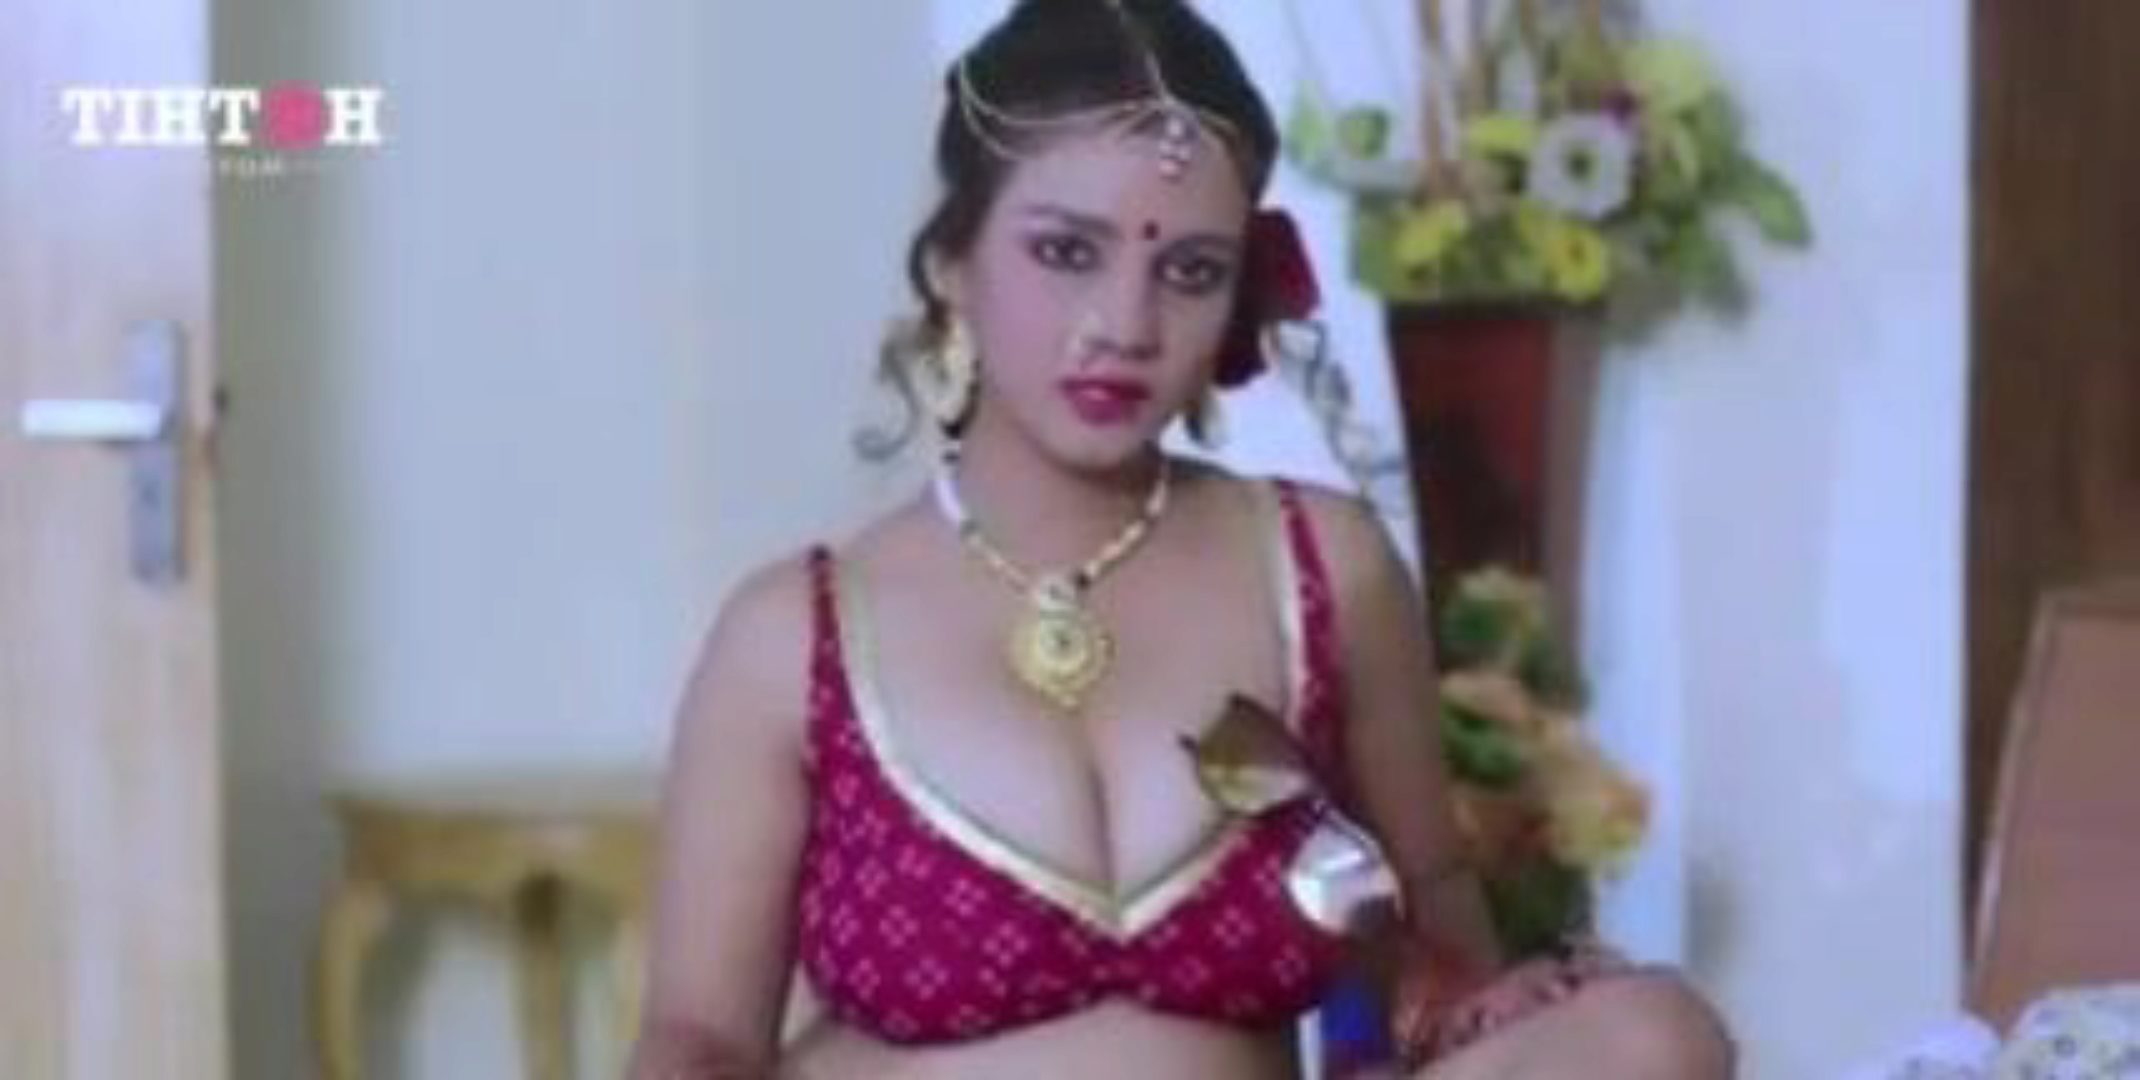 Free Sexy Film - Lahore Sexy Movies Blue Film Girls Wwerm Free Porn Tube Movies - XVDS TV